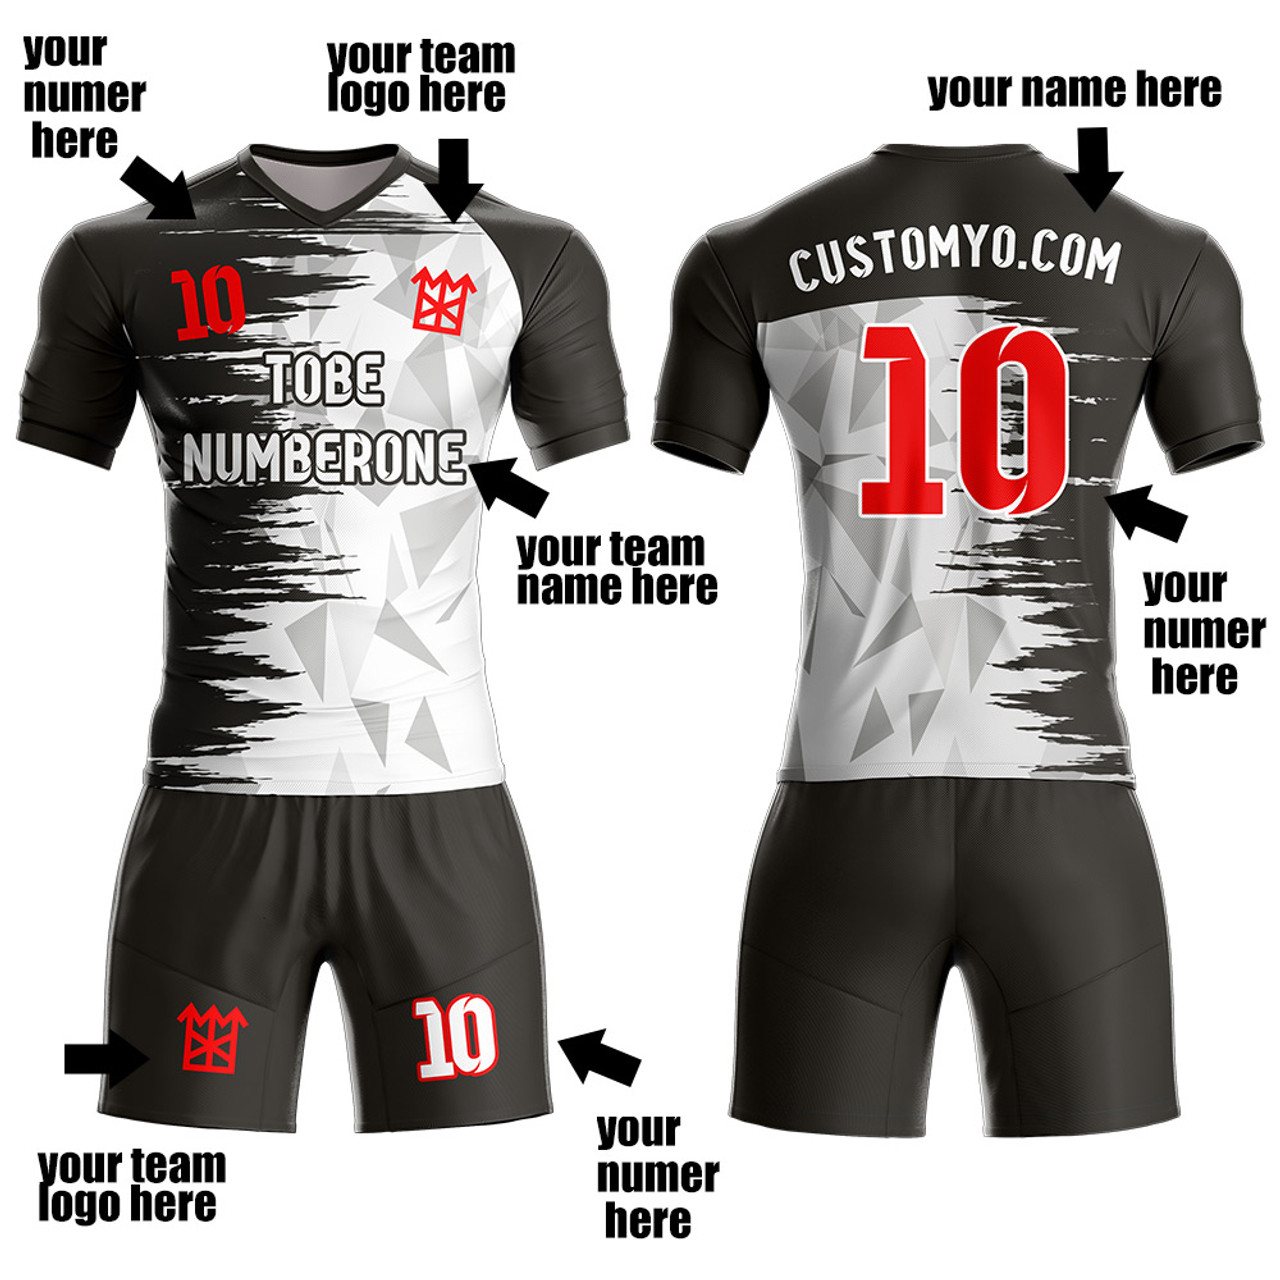 Custom Football Uniforms for Men and Kids Football Teams